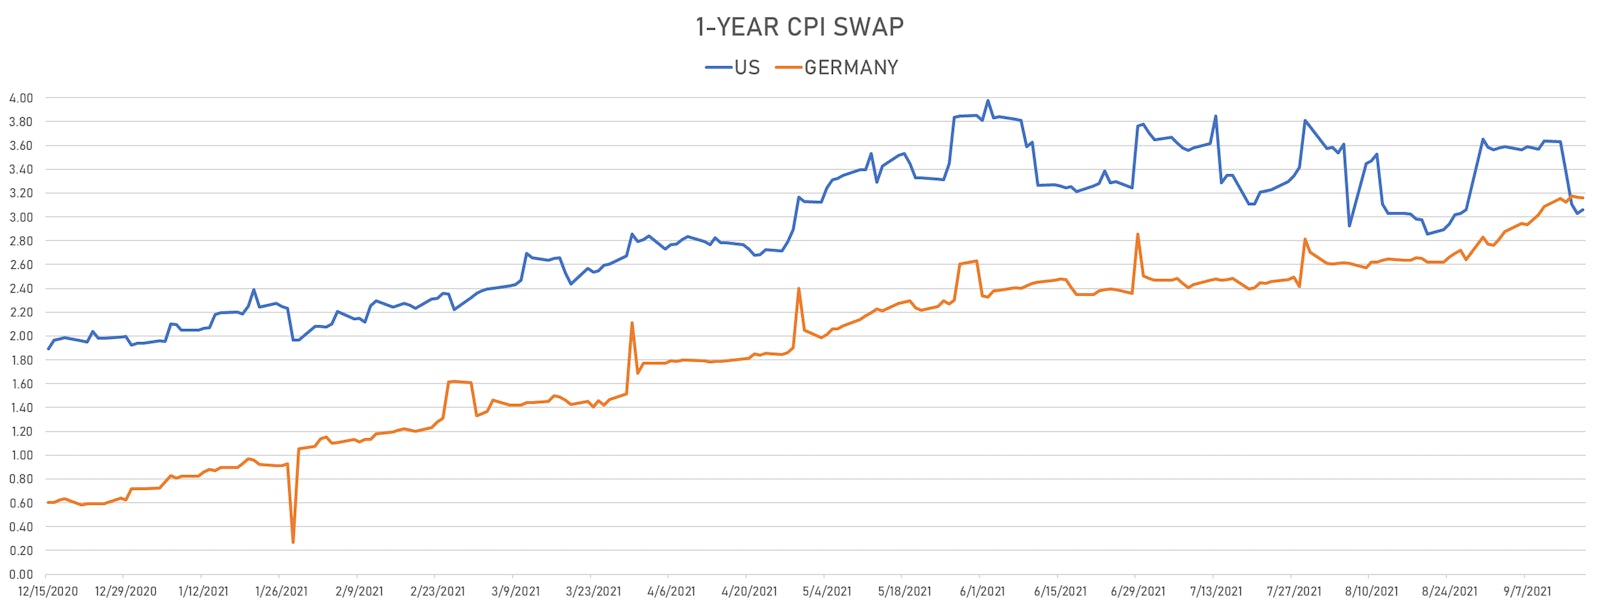 1Y CPI Swap Spot In The US vs Germany | Sources: ϕpost, Refinitiv data